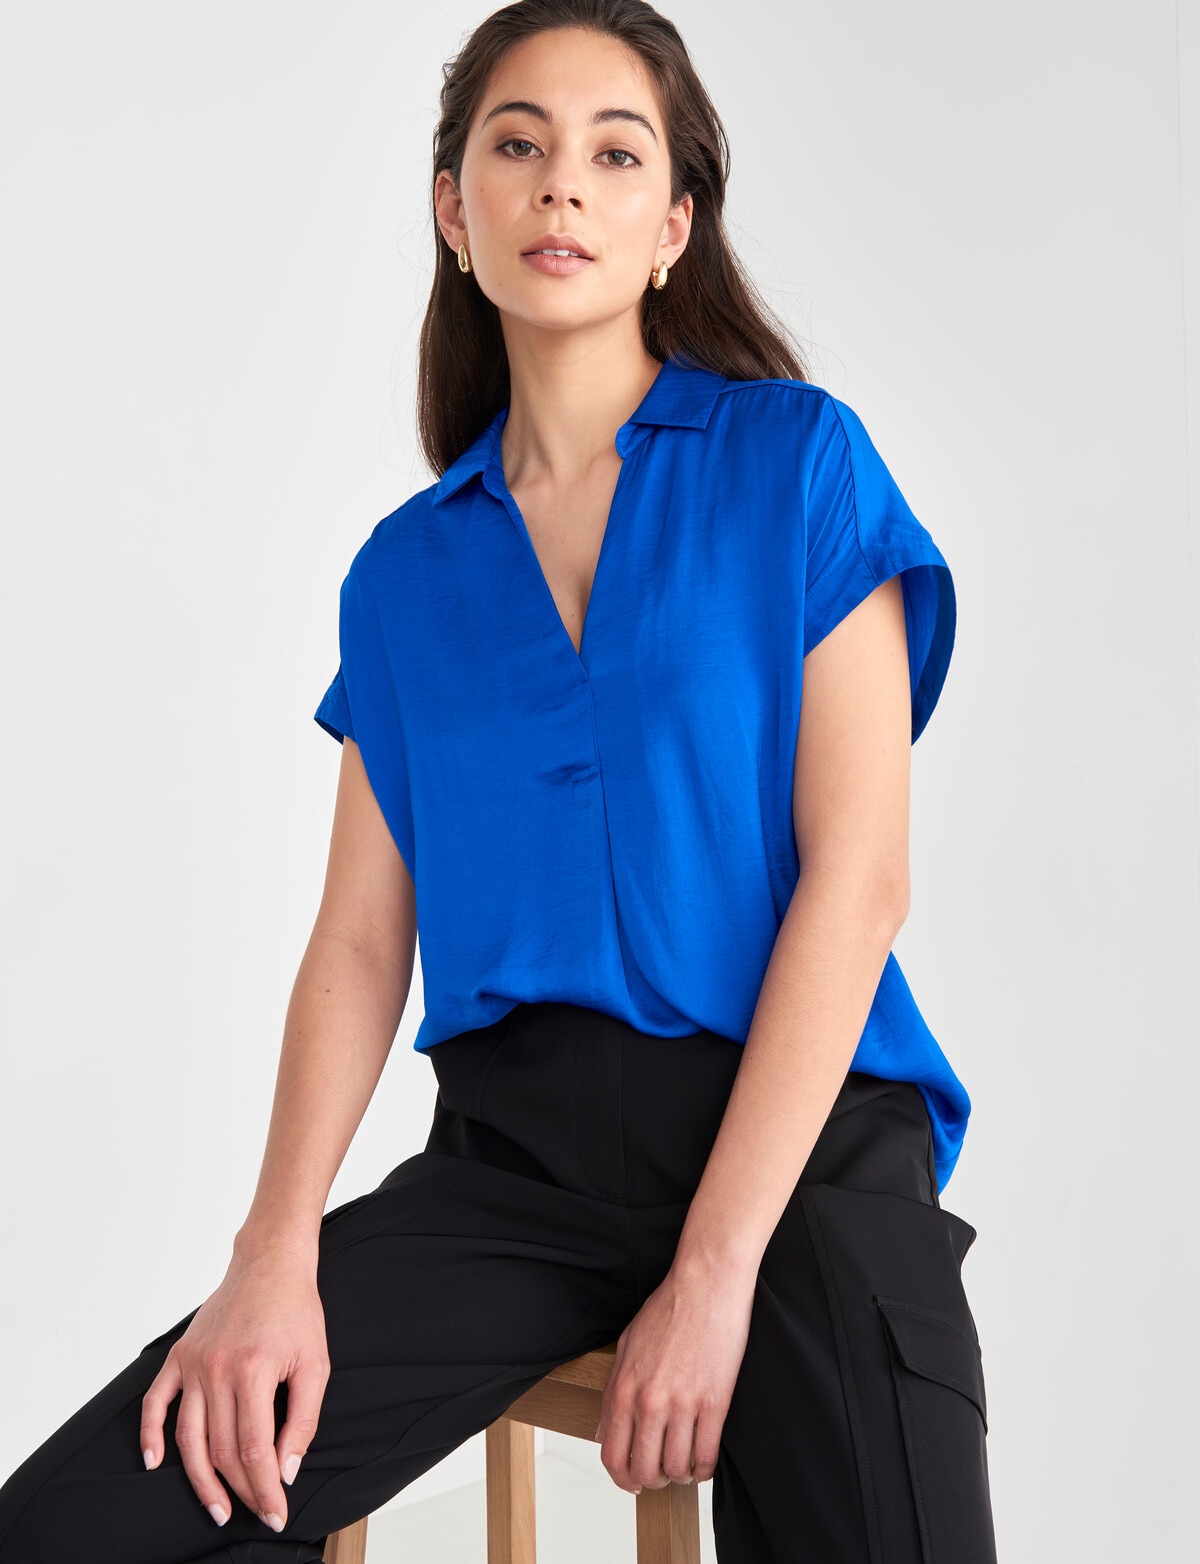 Three Dots Womens Dark blue Short Sleeve Shirt Size Small - beyond